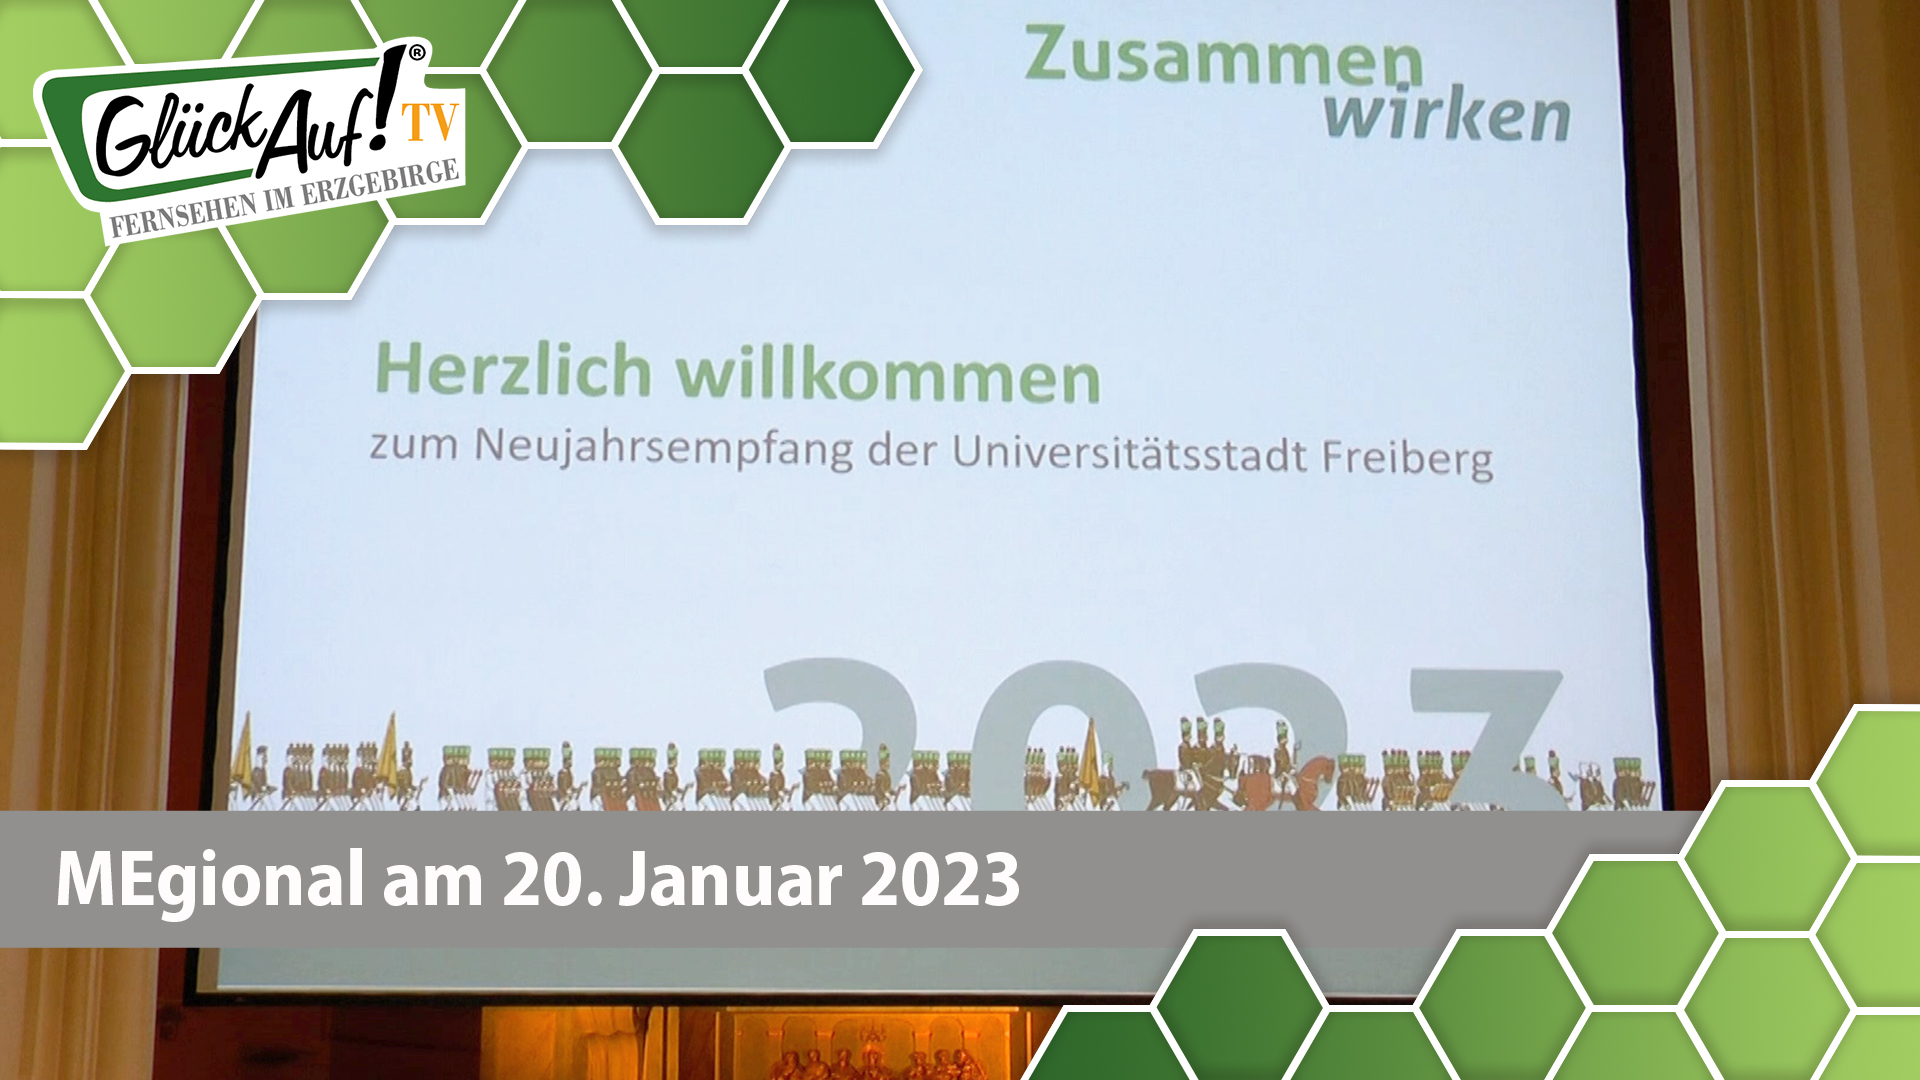 MEgional am 20. Januar 2023 - mit dem Neujahrsempfang in Freiberg